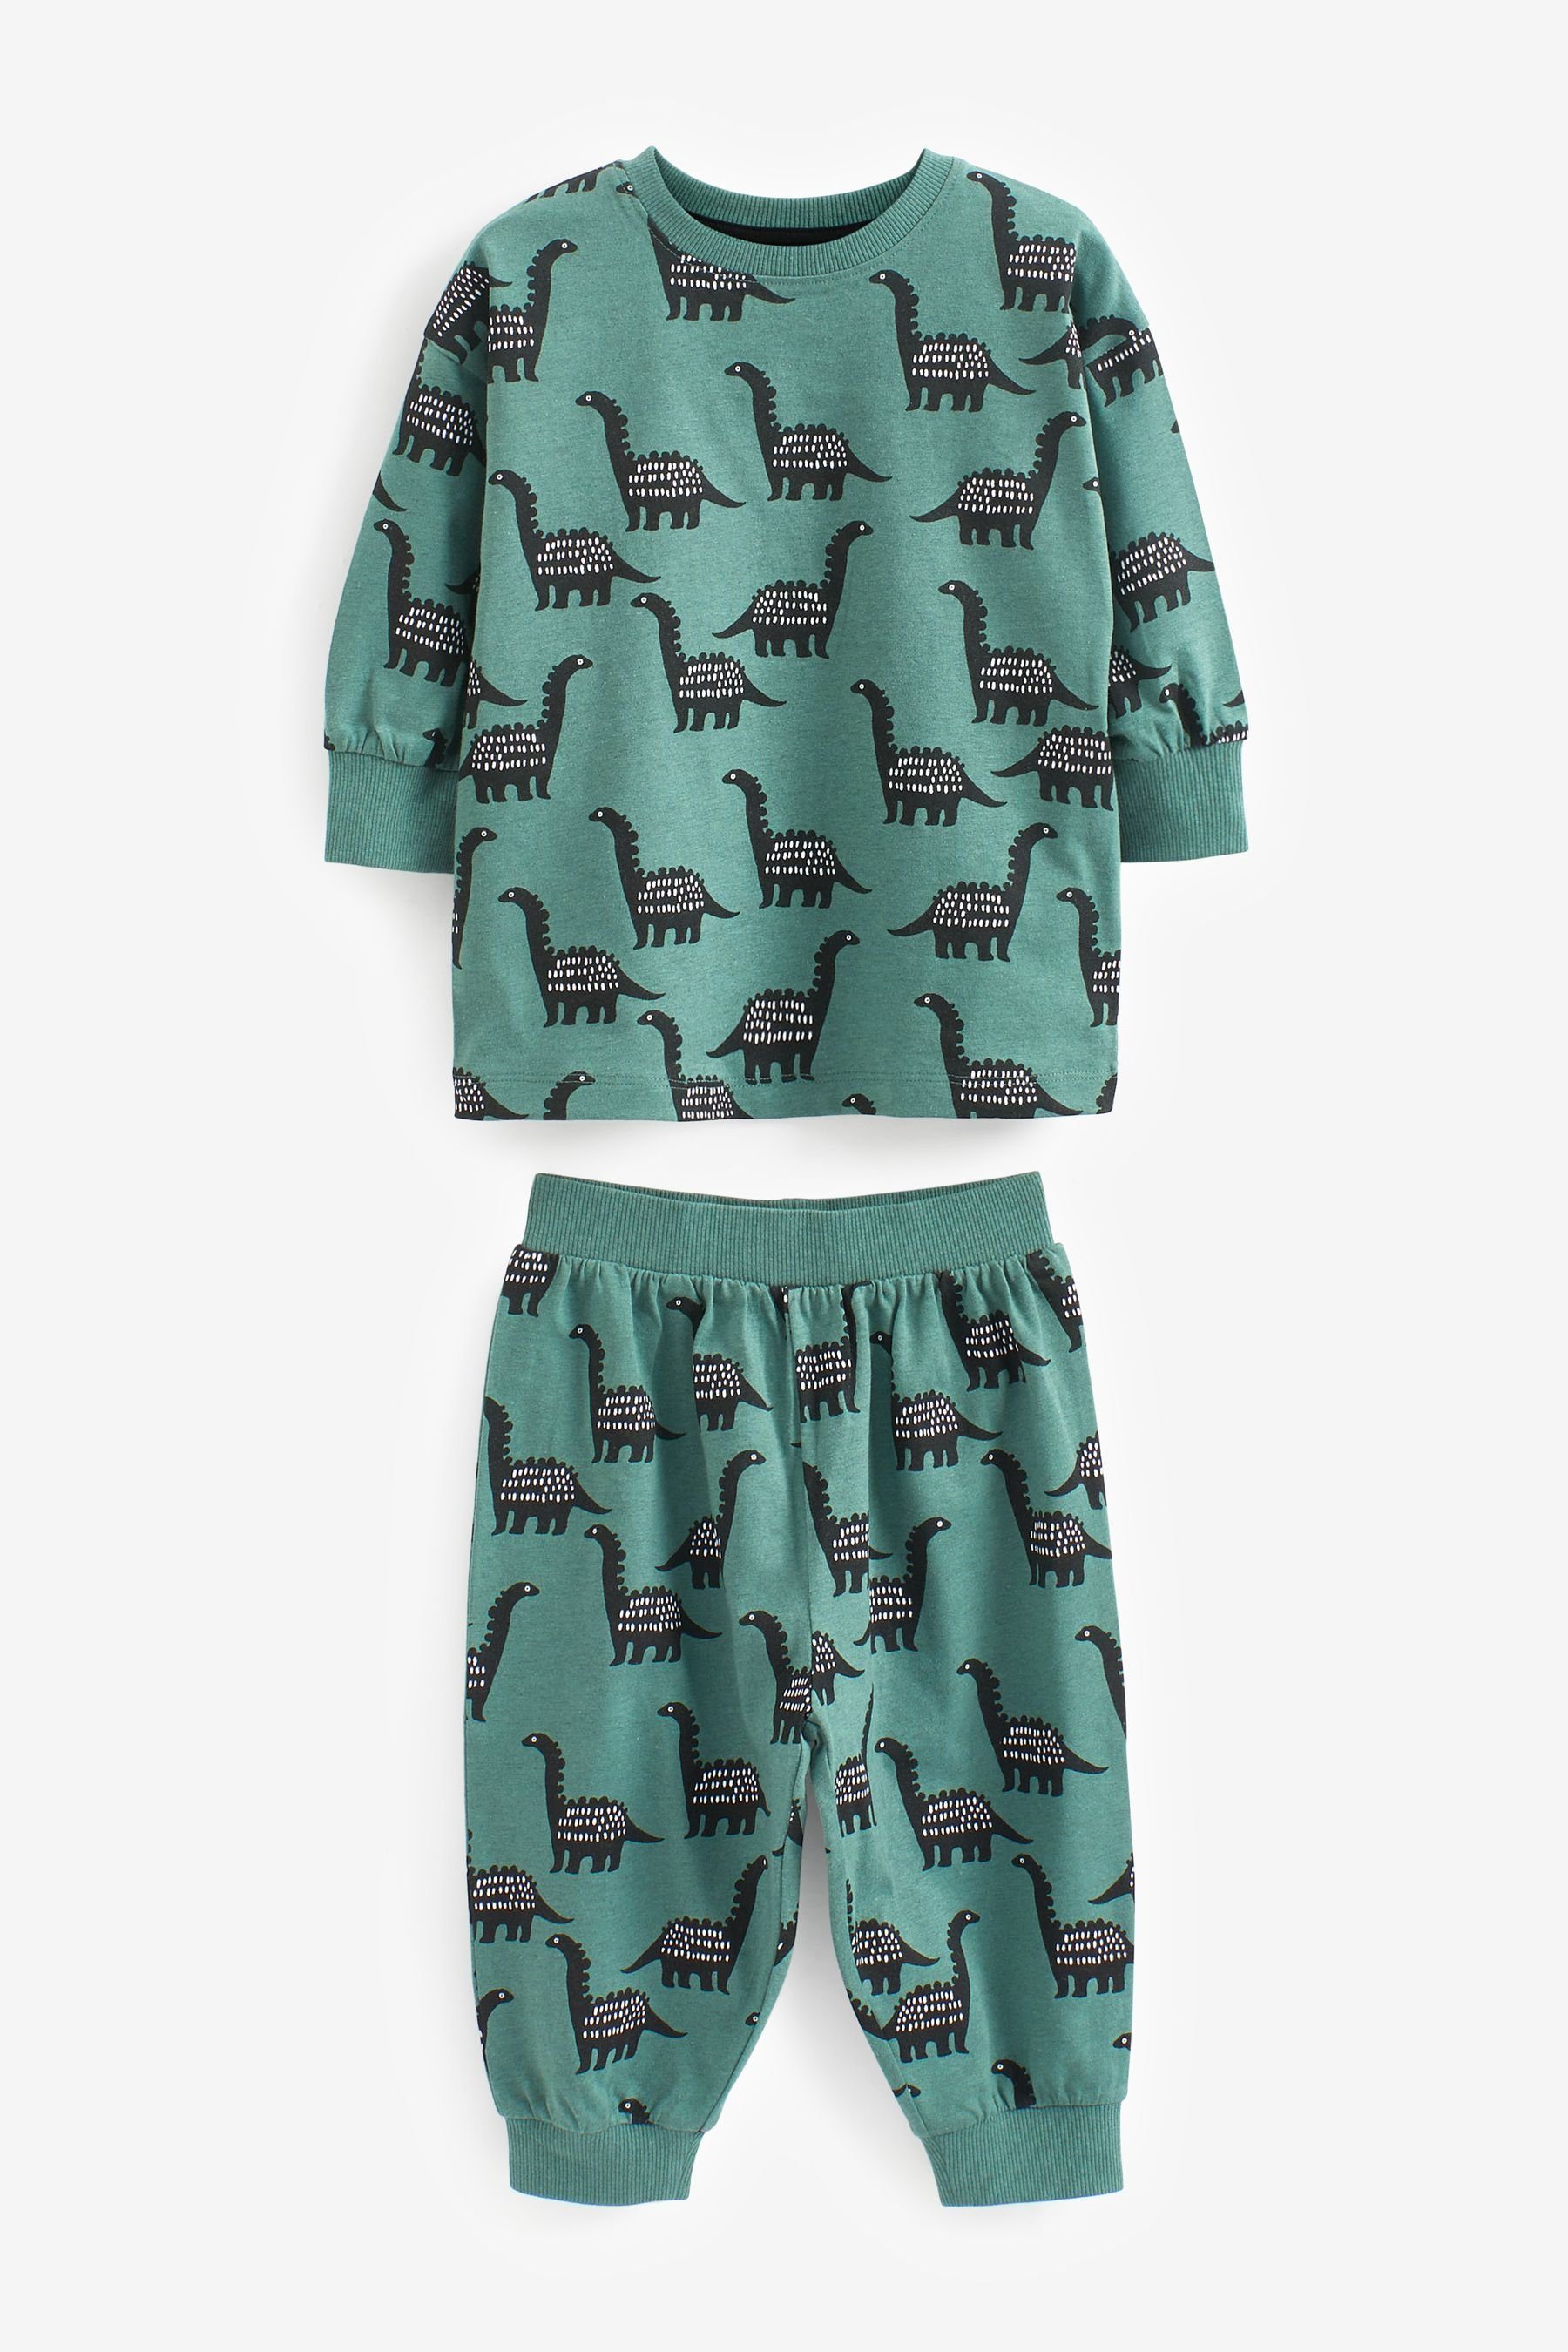 Pink/Green Pyjama Schlafanzüge Dino-Print (6 tlg) Next 3er-Pack Snuggle mit